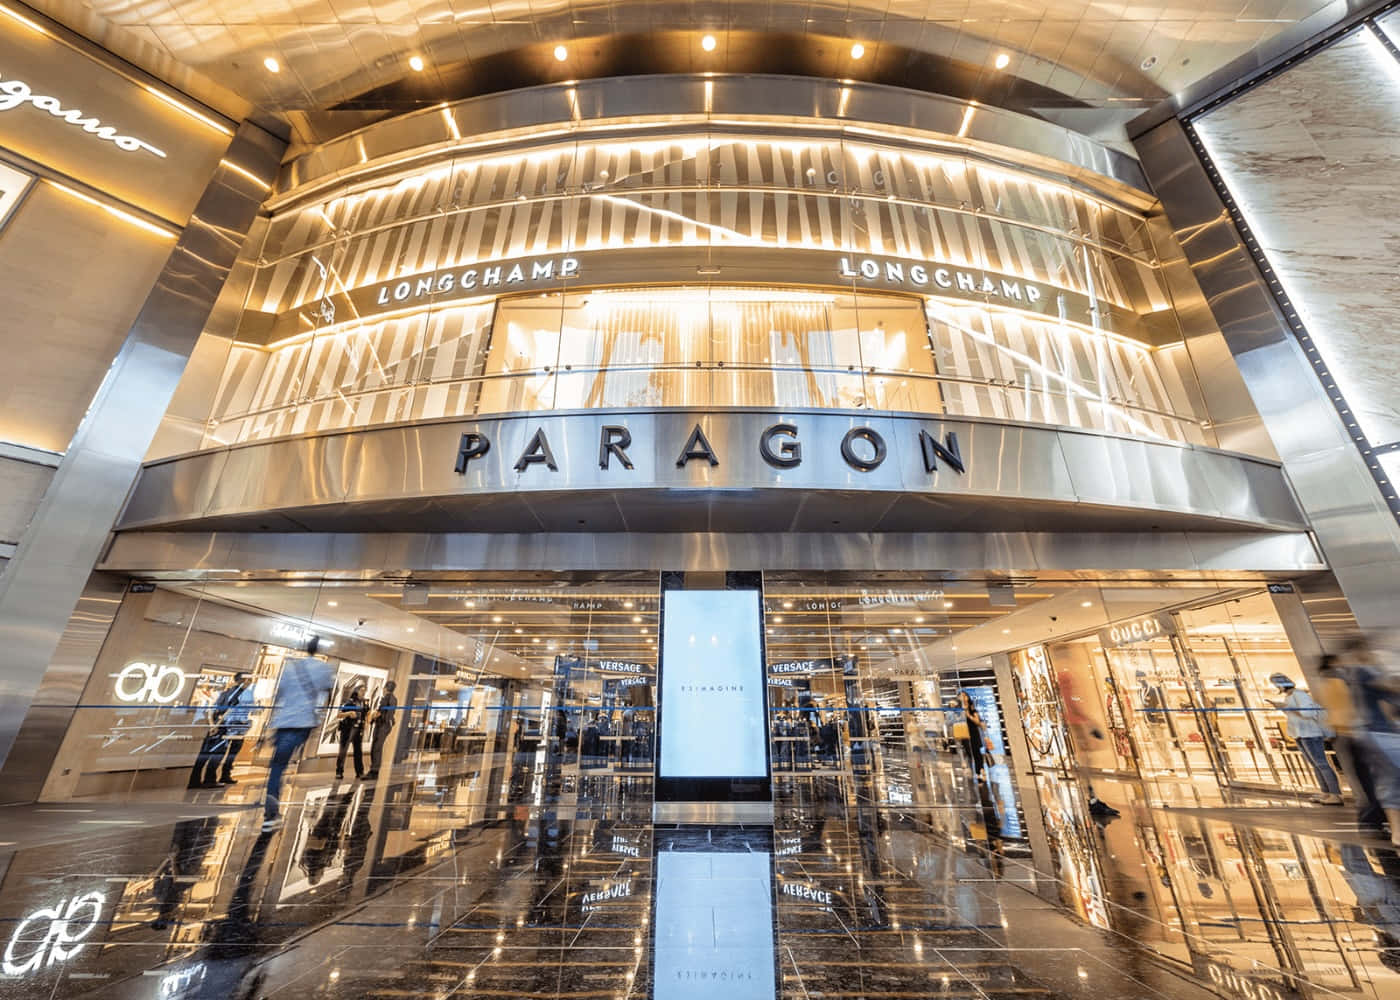 Paragon Shopping Mall Orchard Road Singapore Wallpaper